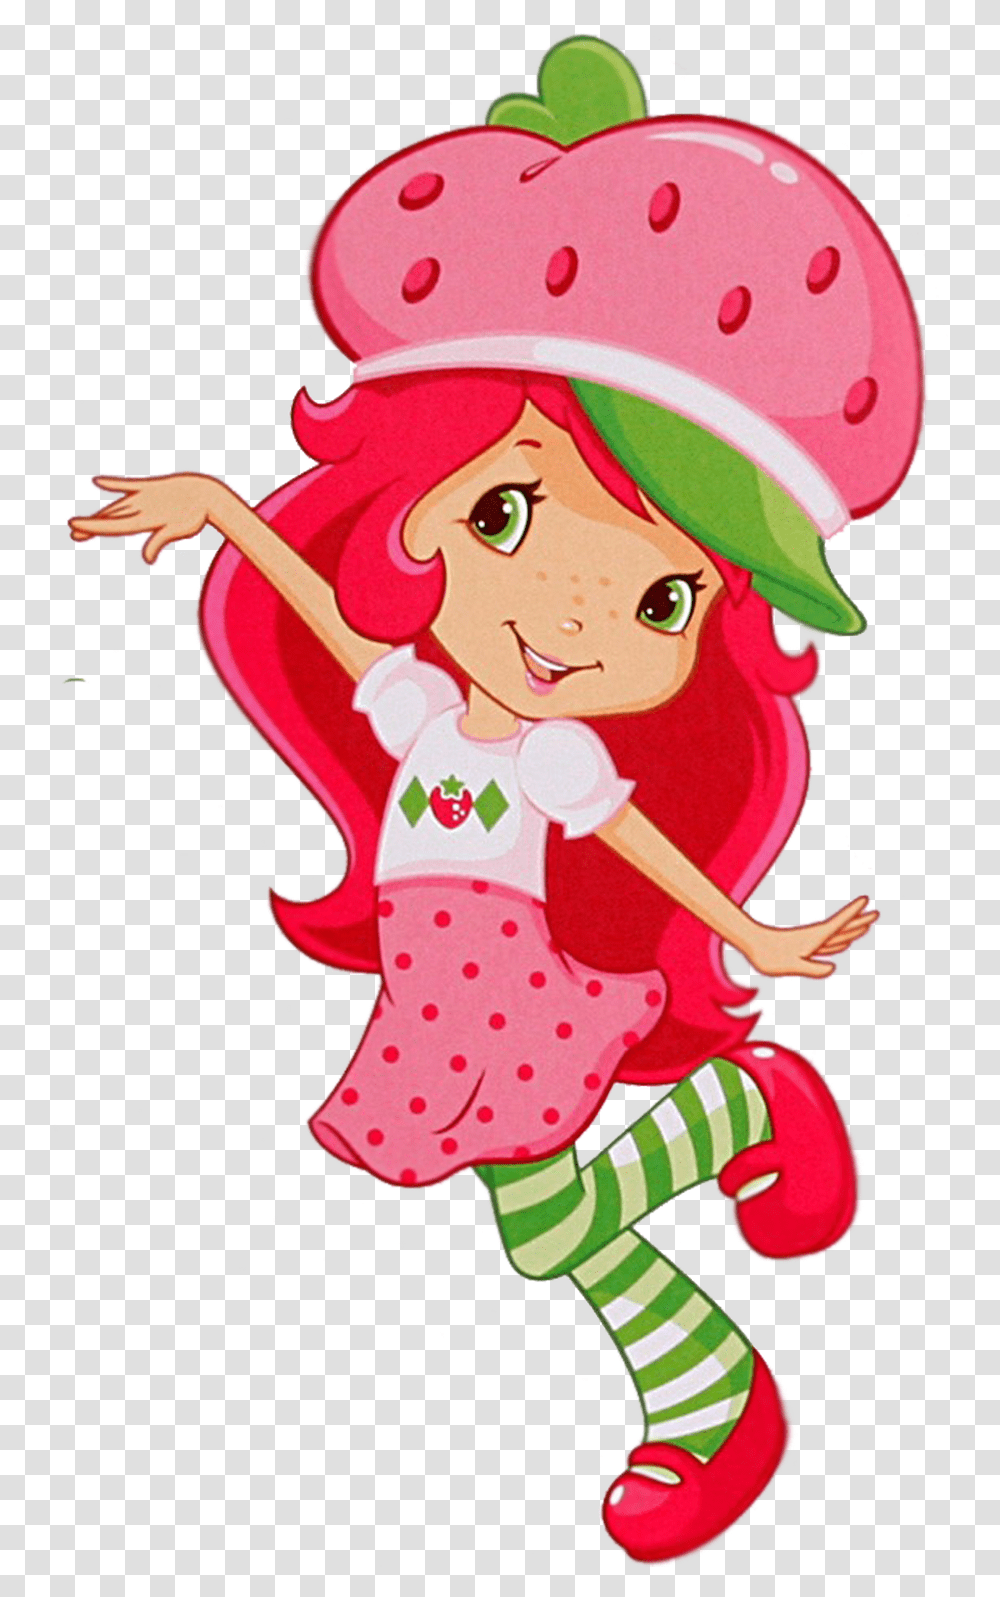 Hat Clipart Strawberry Shortcake Cartoon Strawberry Shortcake Birthday, Elf, Person, Human, Outdoors Transparent Png